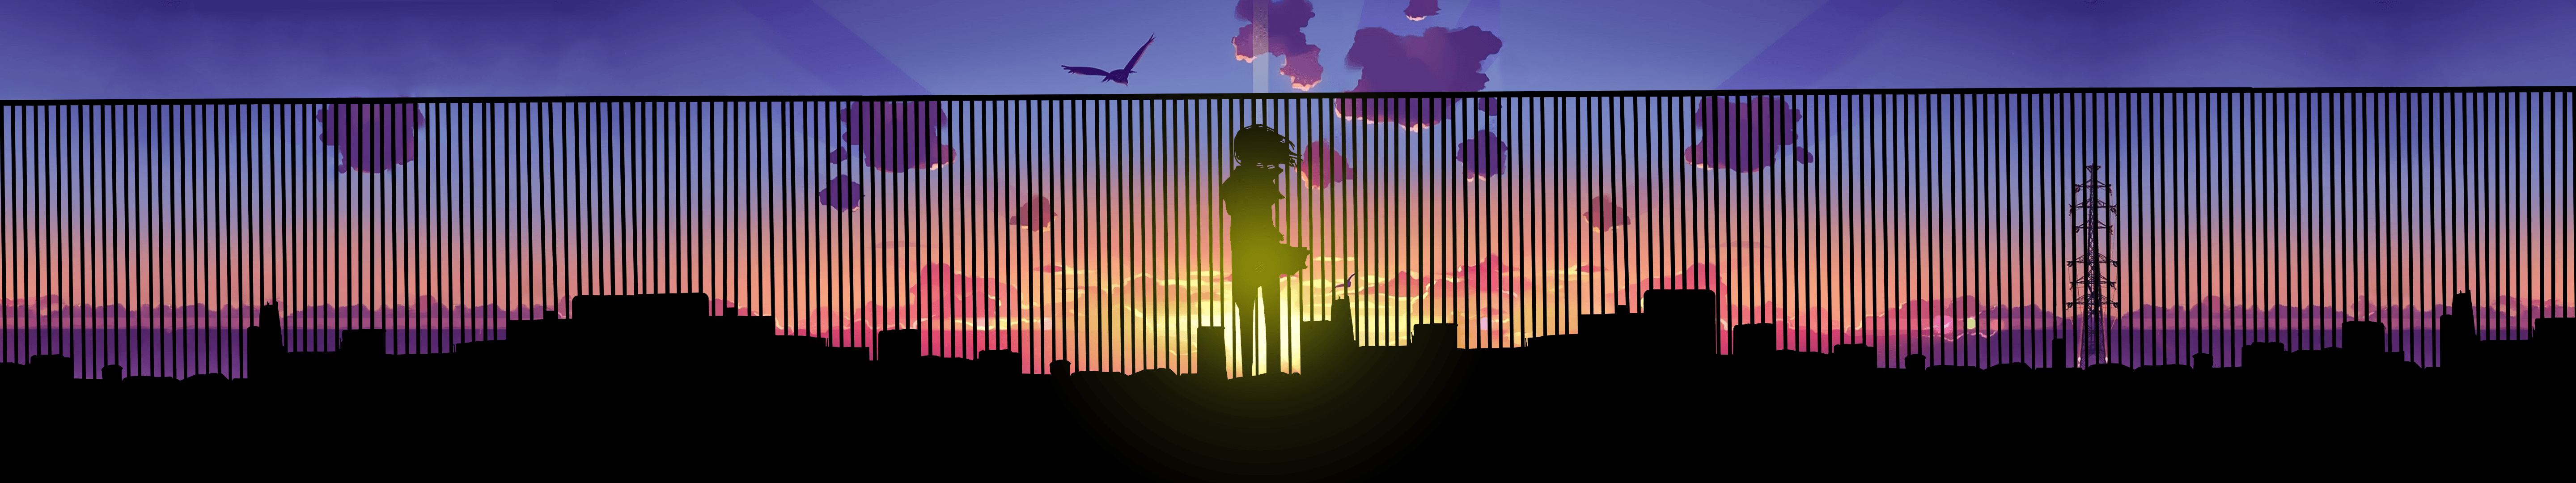 Wallpaper, sunlight, sunset, city, cityscape, night, anime